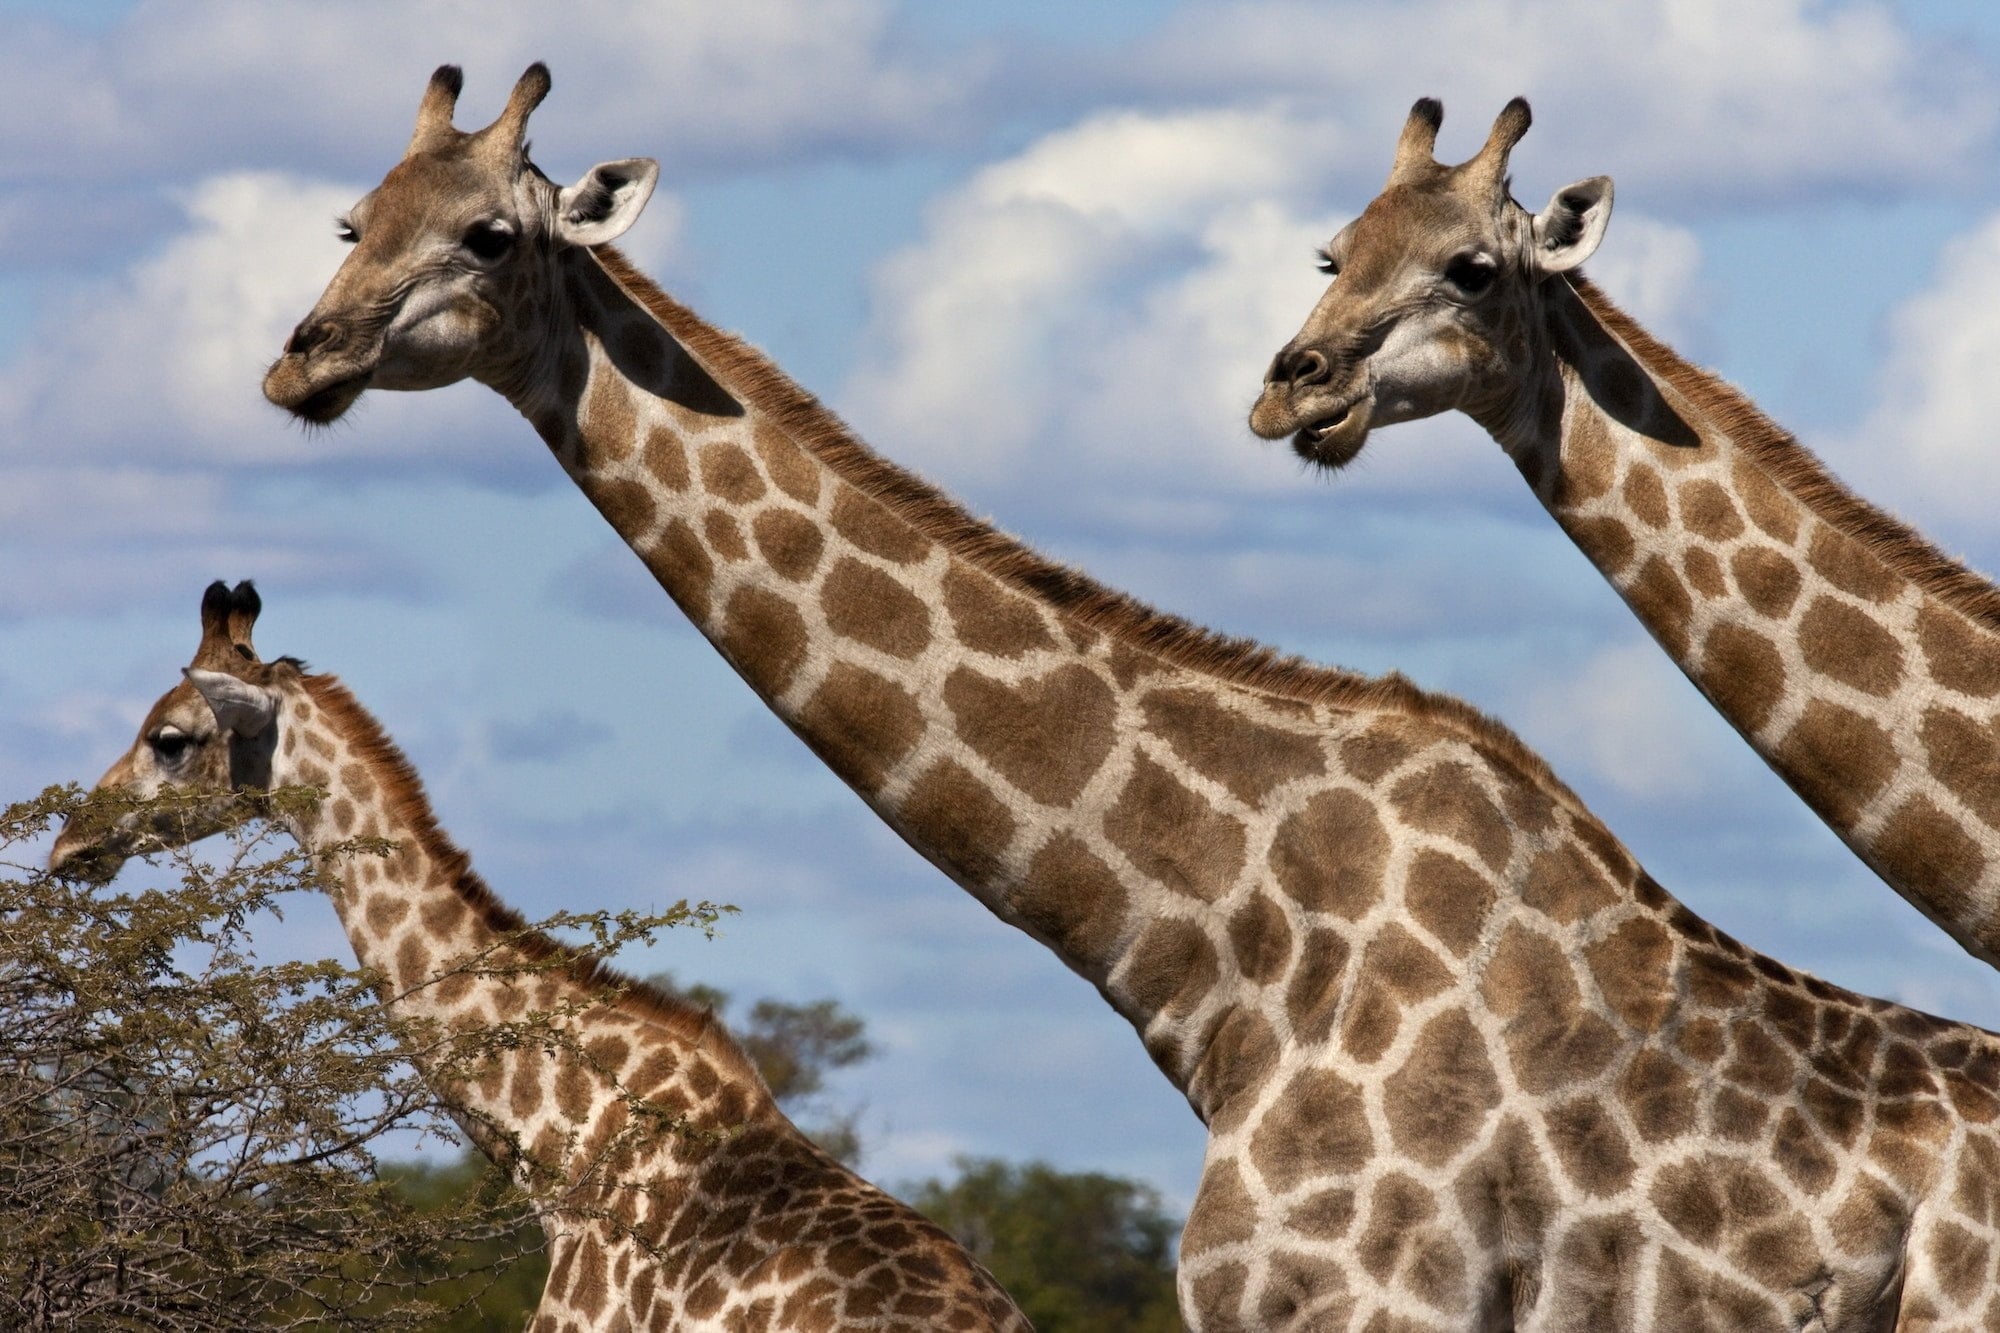 A group of Giraffe (Giraffa camelopardalis) in the Savuti region of Botswana, Africa.